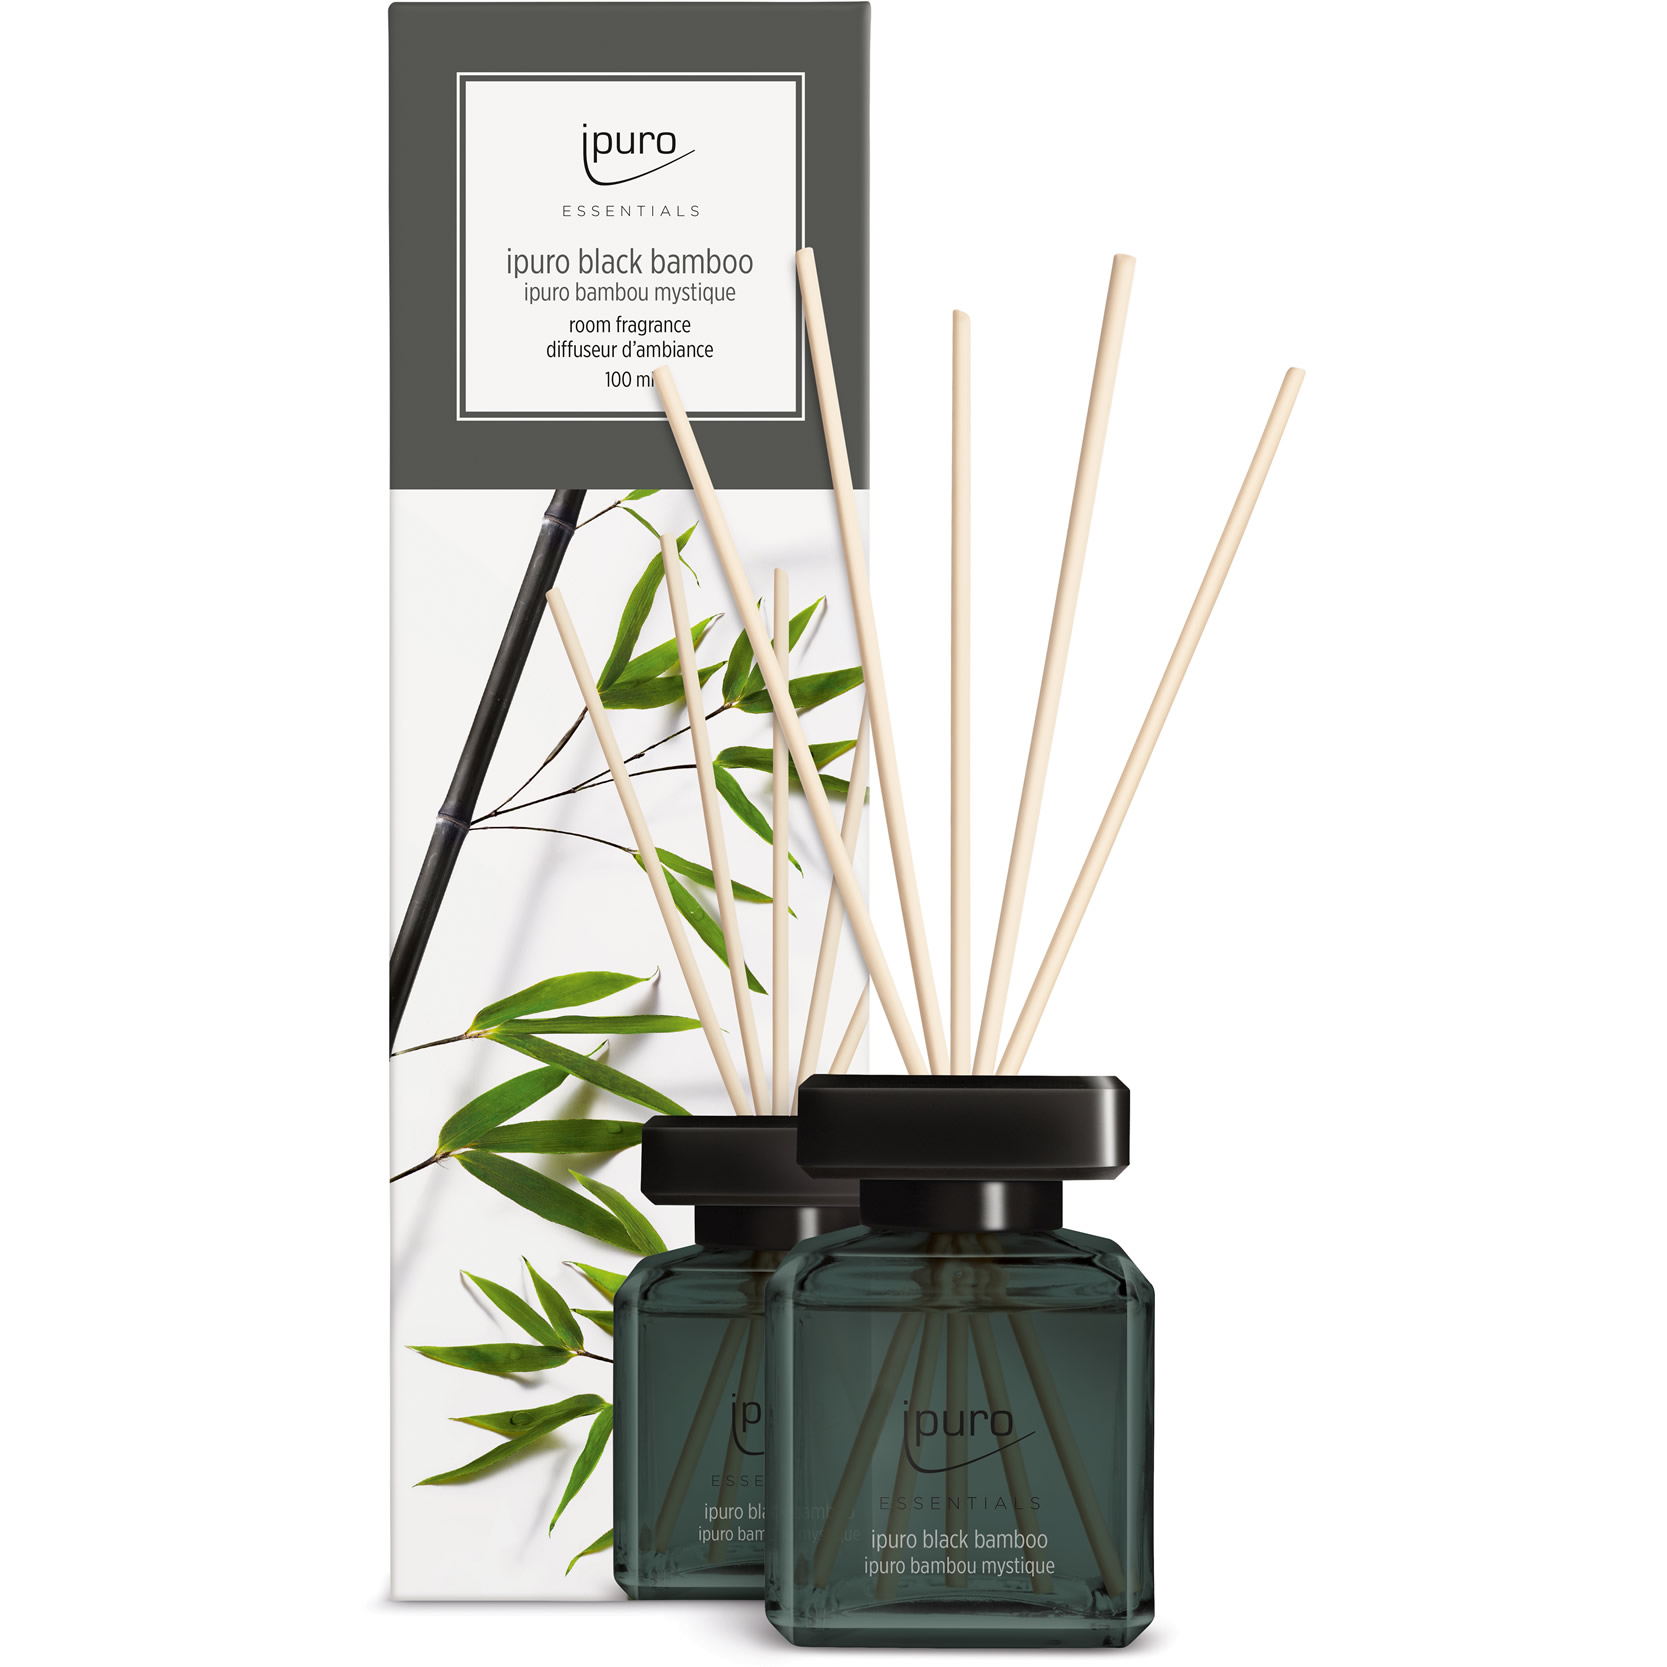 ipuro Fragrance black bamboo, 100ml - Buy online now